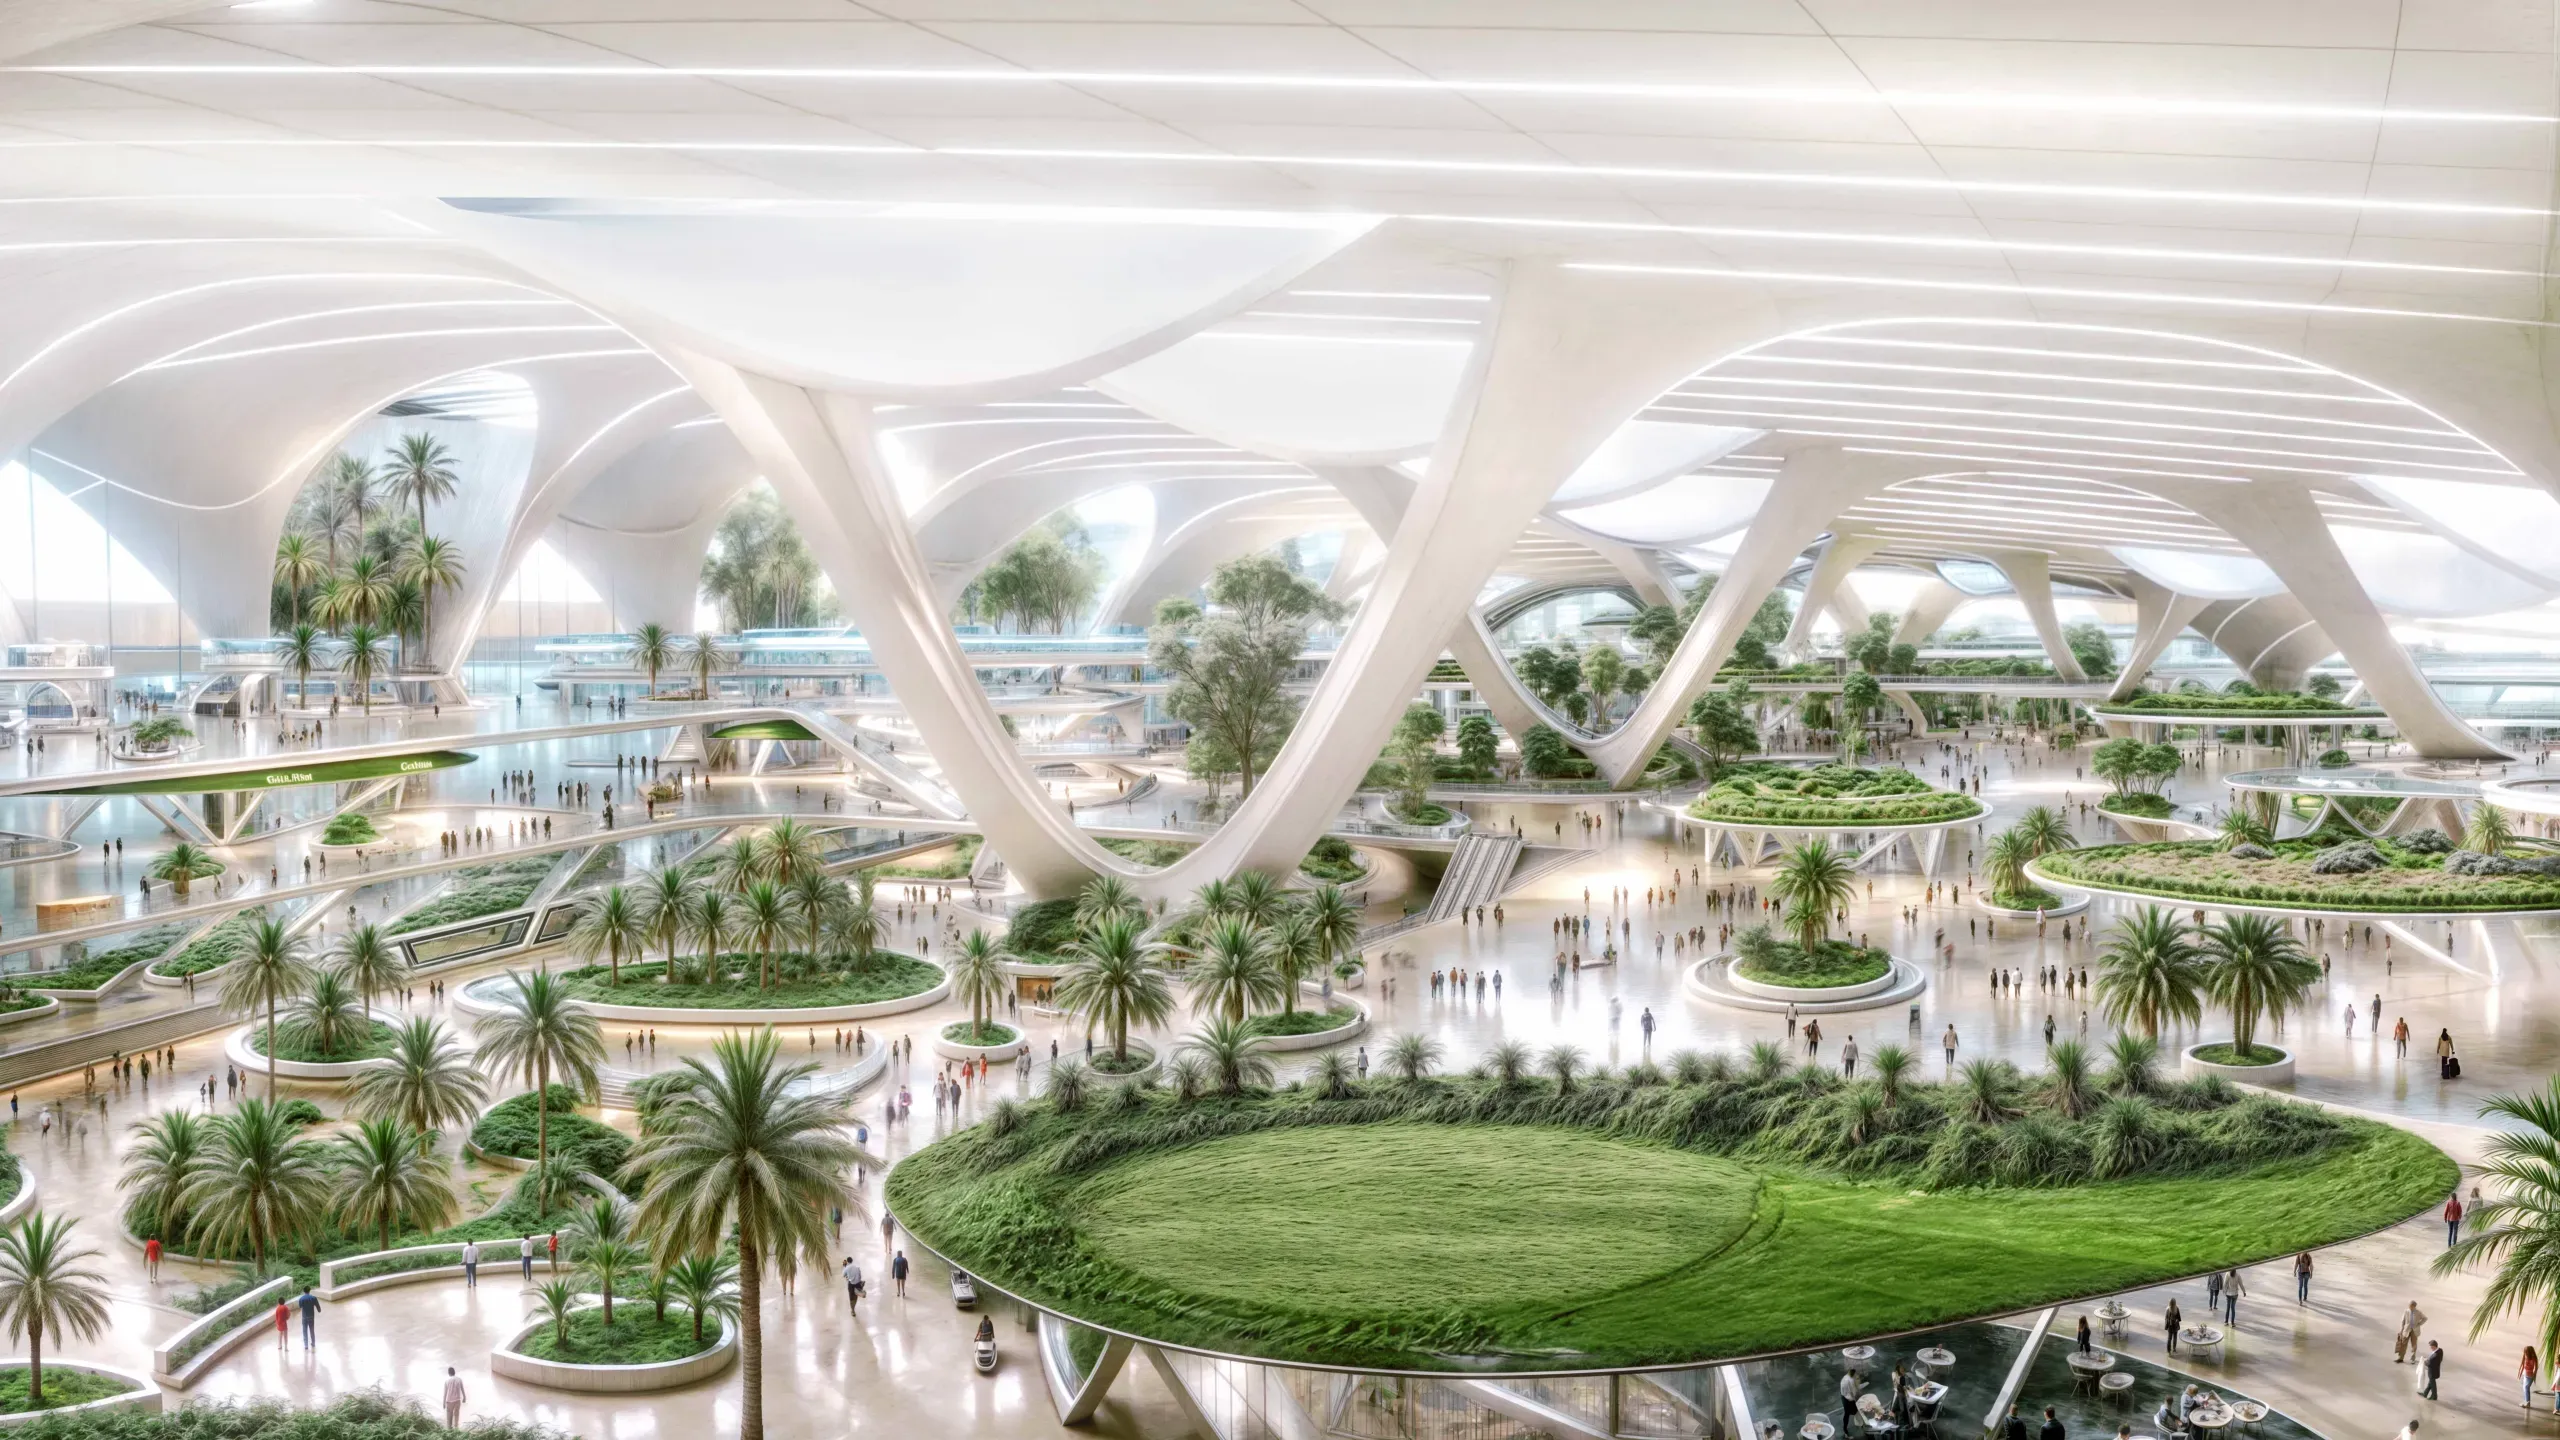 New Dubai Airport2